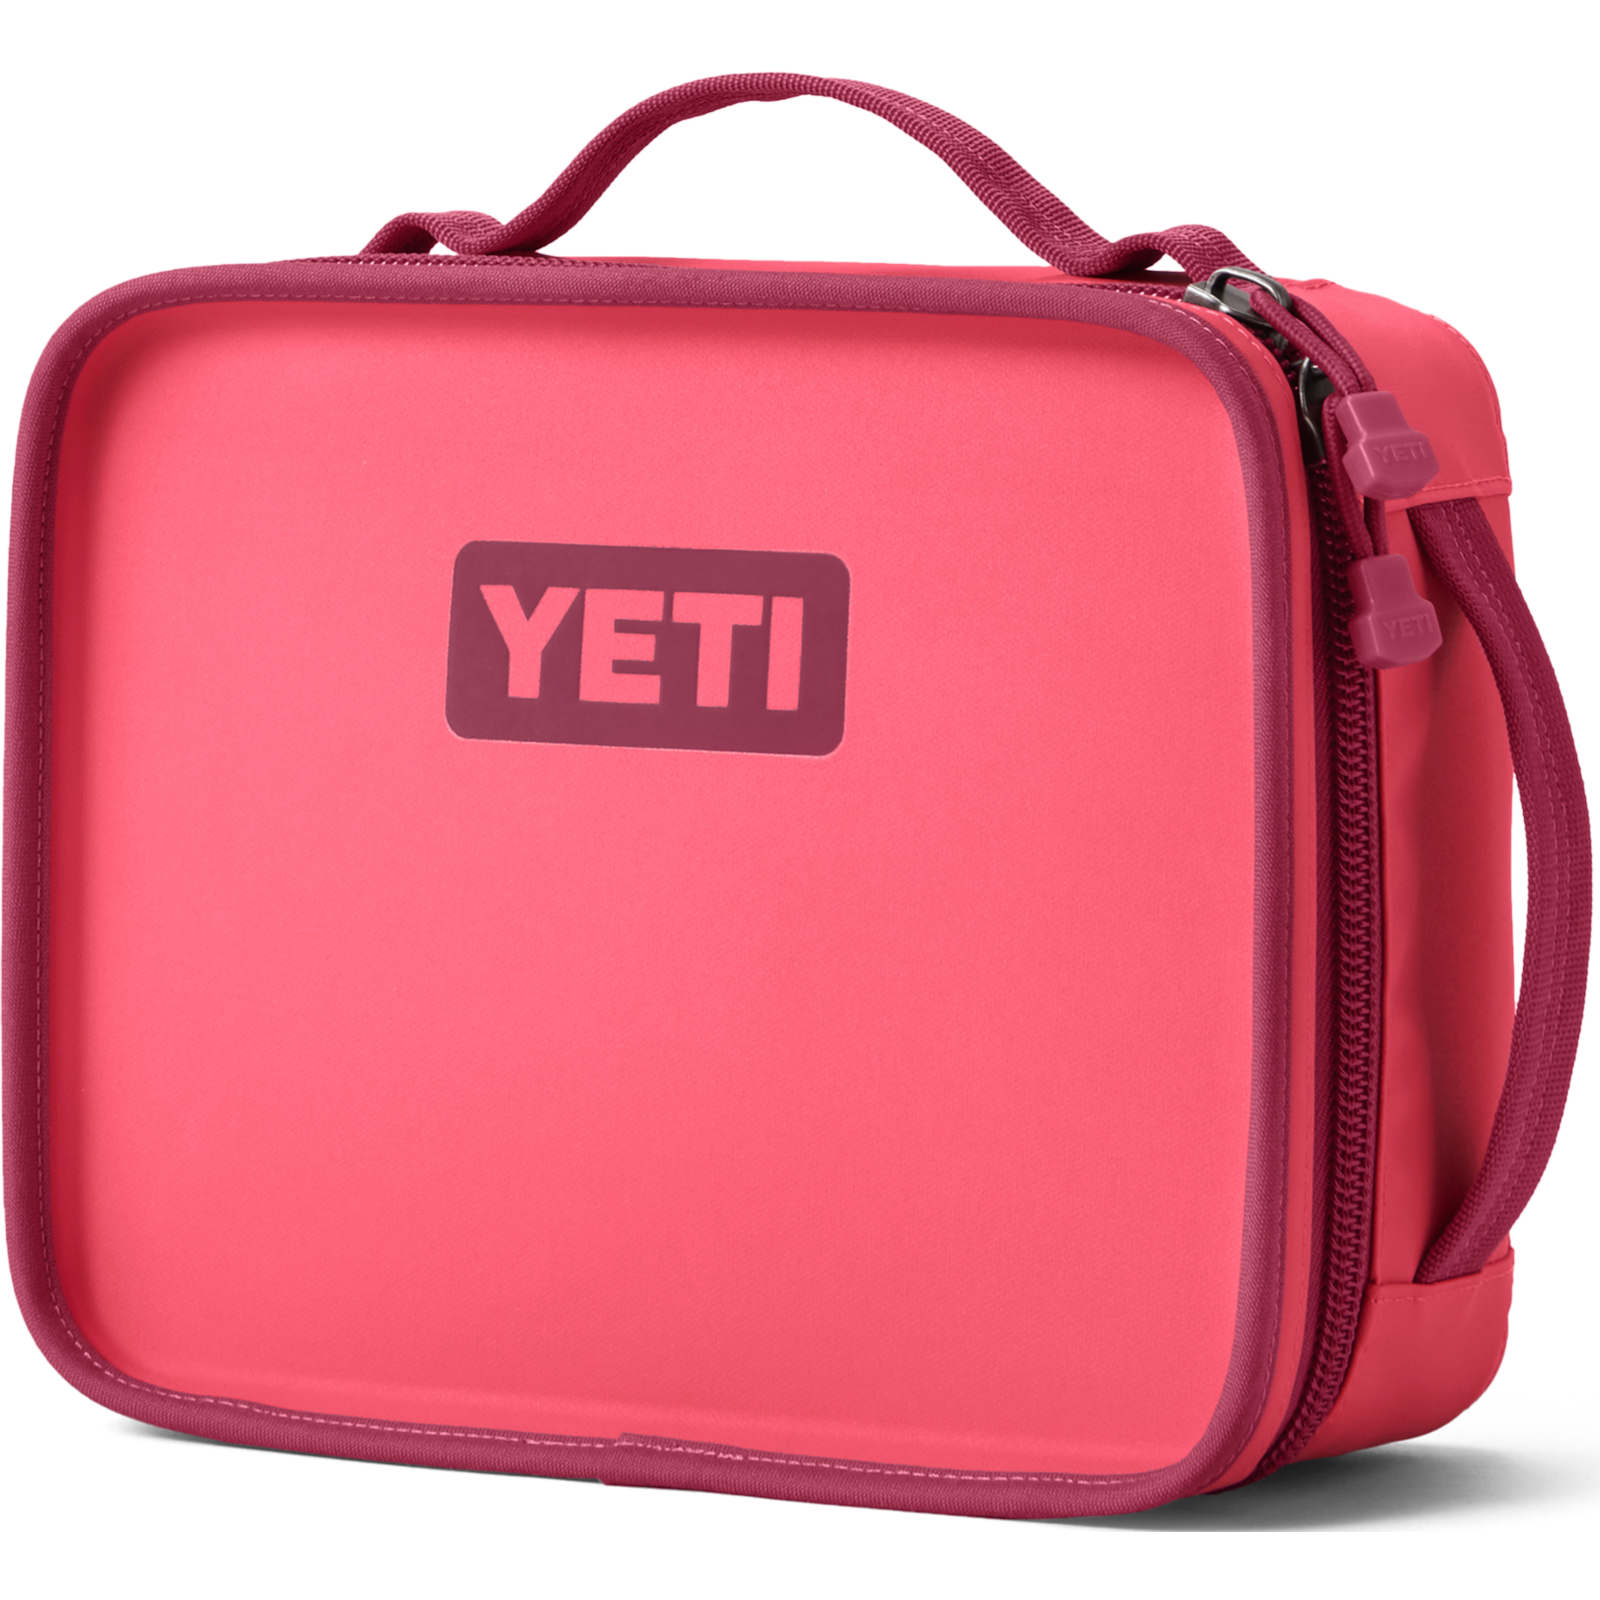 Product Yeti Day Trip Bimini Pink Lunch Box Standing Angle View